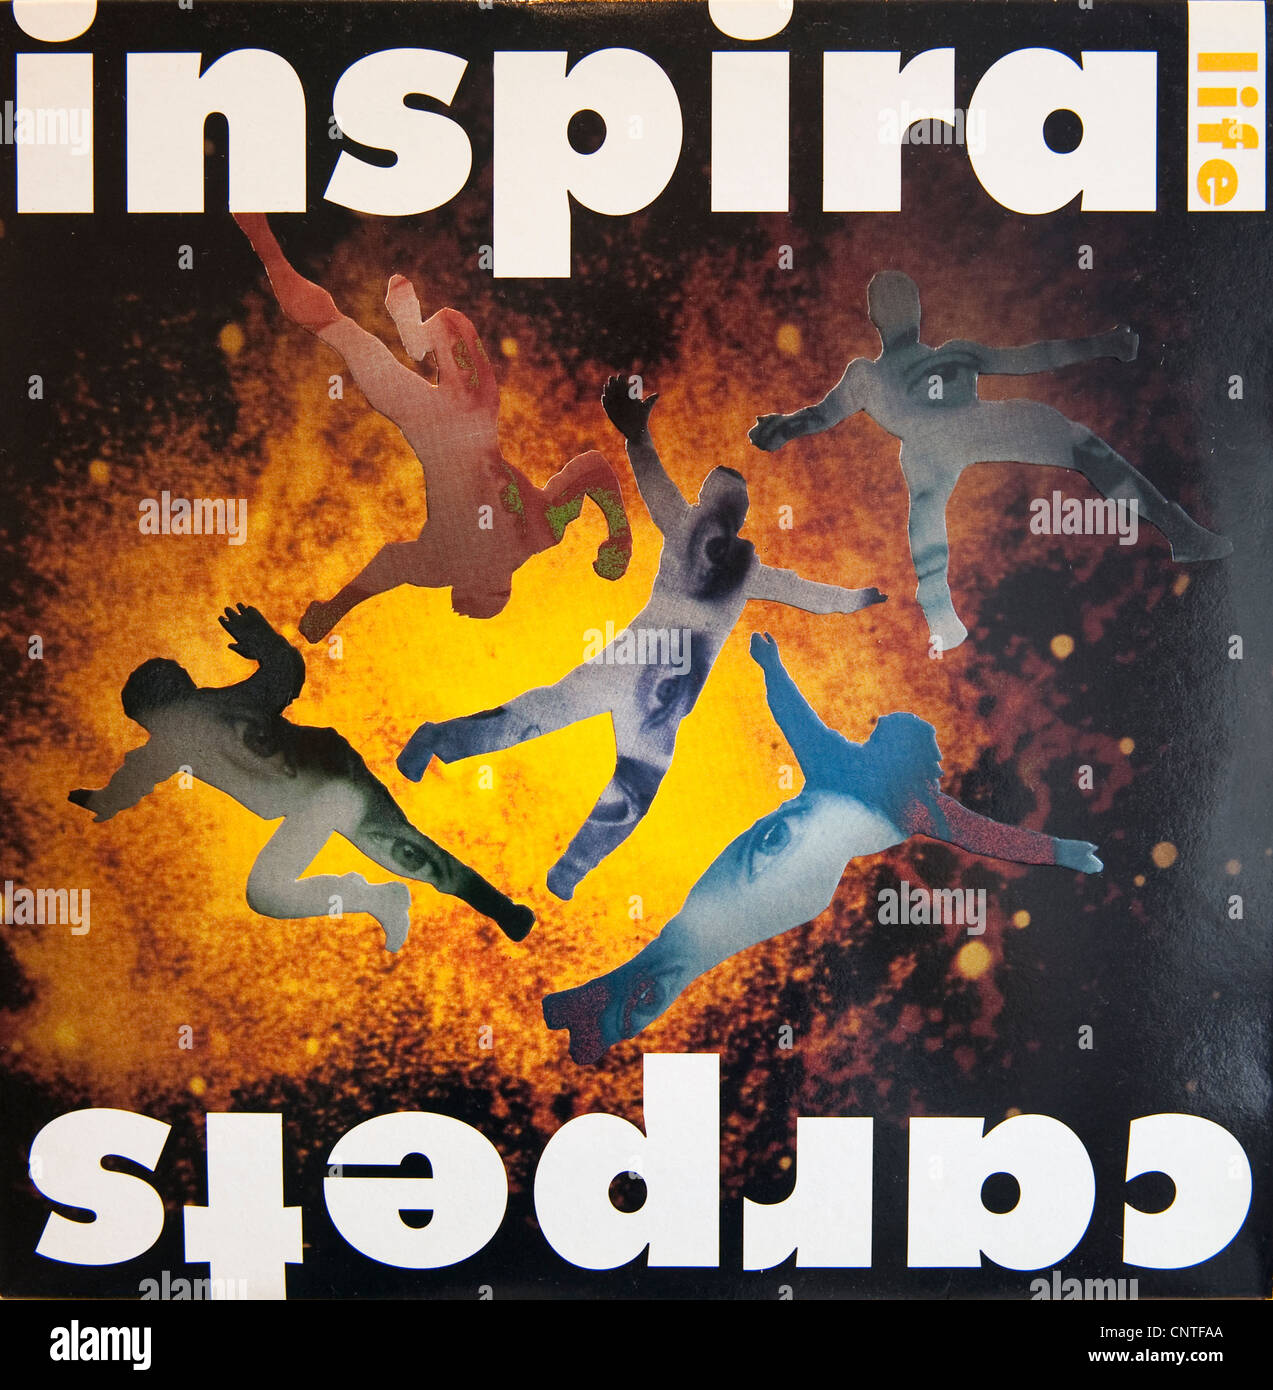 Les Inspiral Carpets 1990 Couverture de l'album pour la vie. Clint Boon, Tom Hingley, Graham Lambert, Martyn Walsh, Craig Gill. Banque D'Images